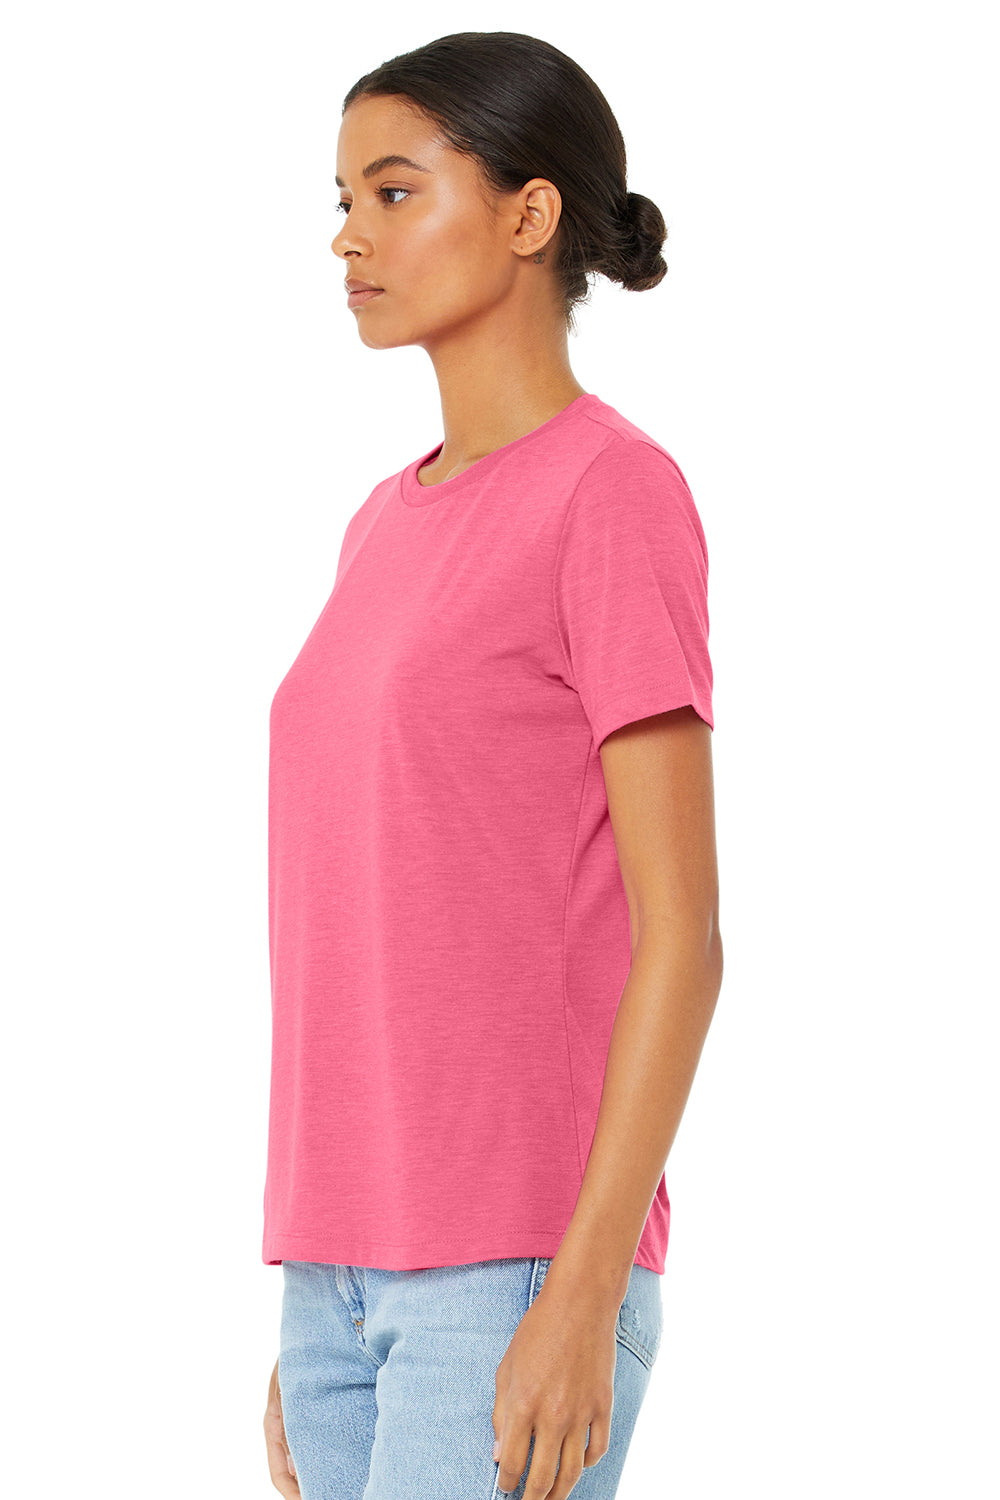 Bella + Canvas BC6413 Womens Short Sleeve Crewneck T-Shirt Charity Pink Model 3Q